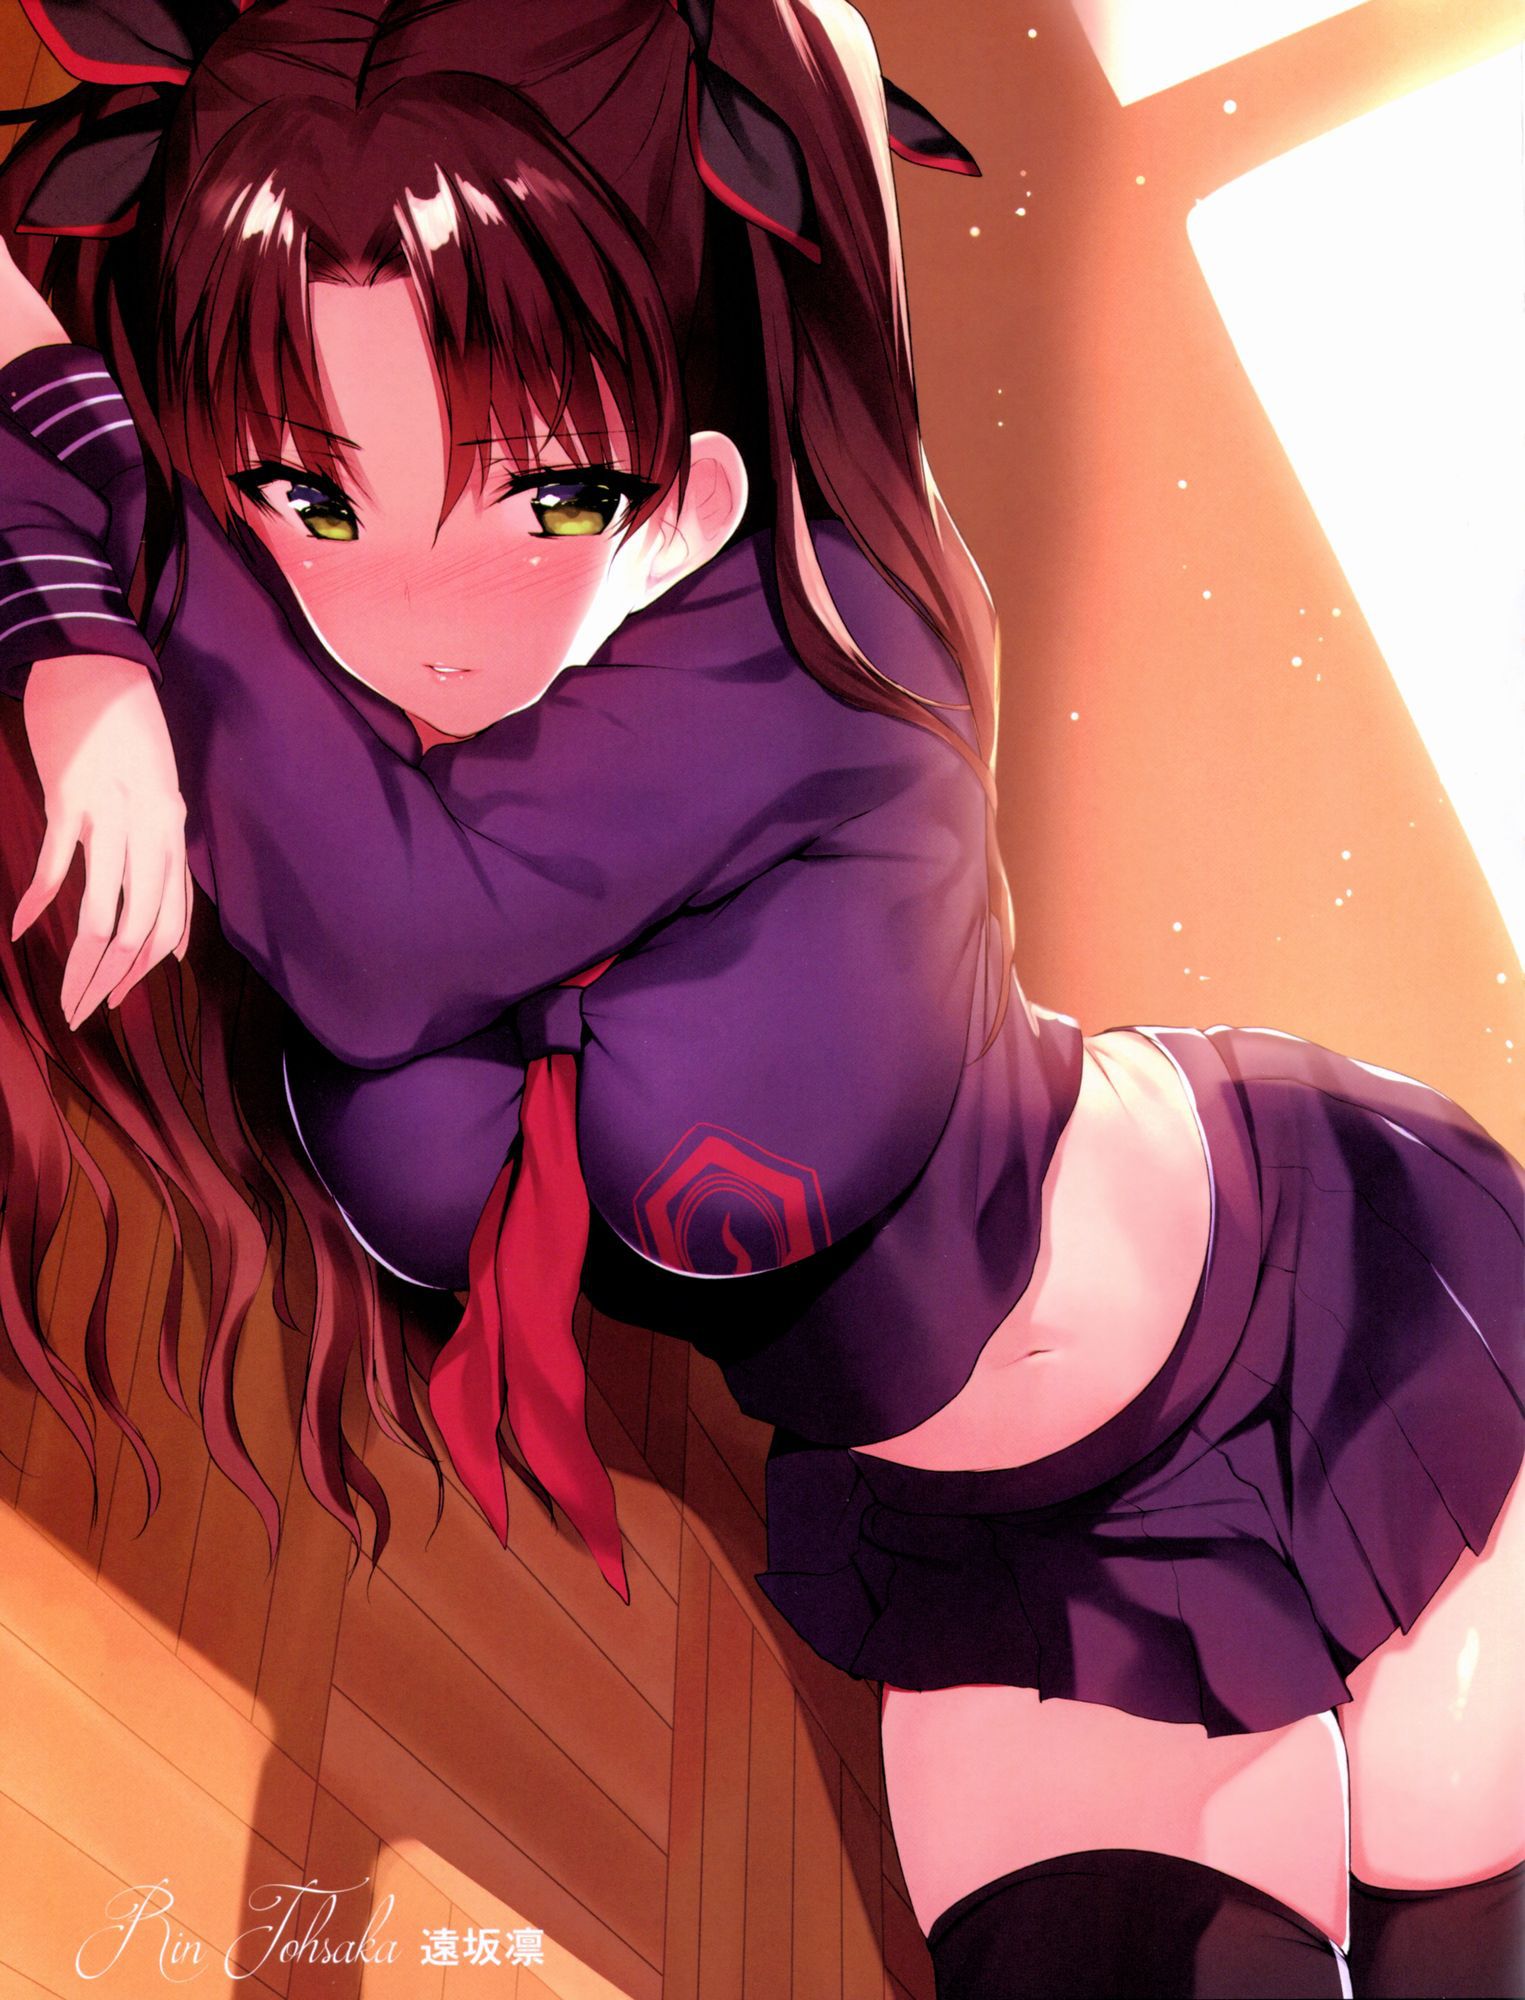 [Secondary] secondary image of a pretty girl wearing a school uniform Part 20 [uniform, non-erotic] 7